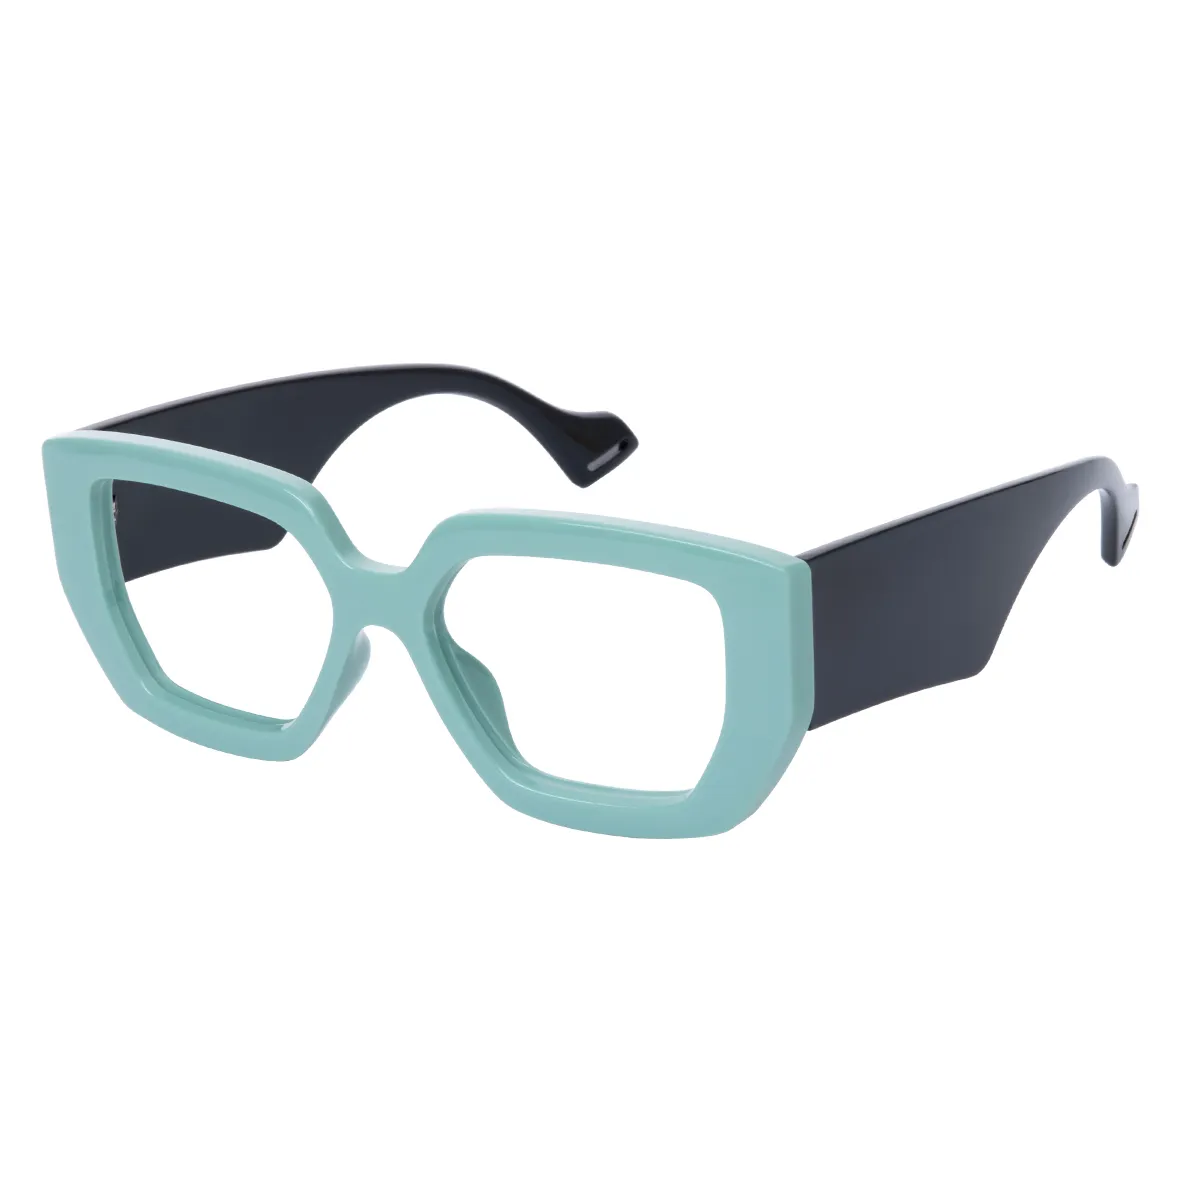 Seraphina - Square Green-Black Glasses for Women